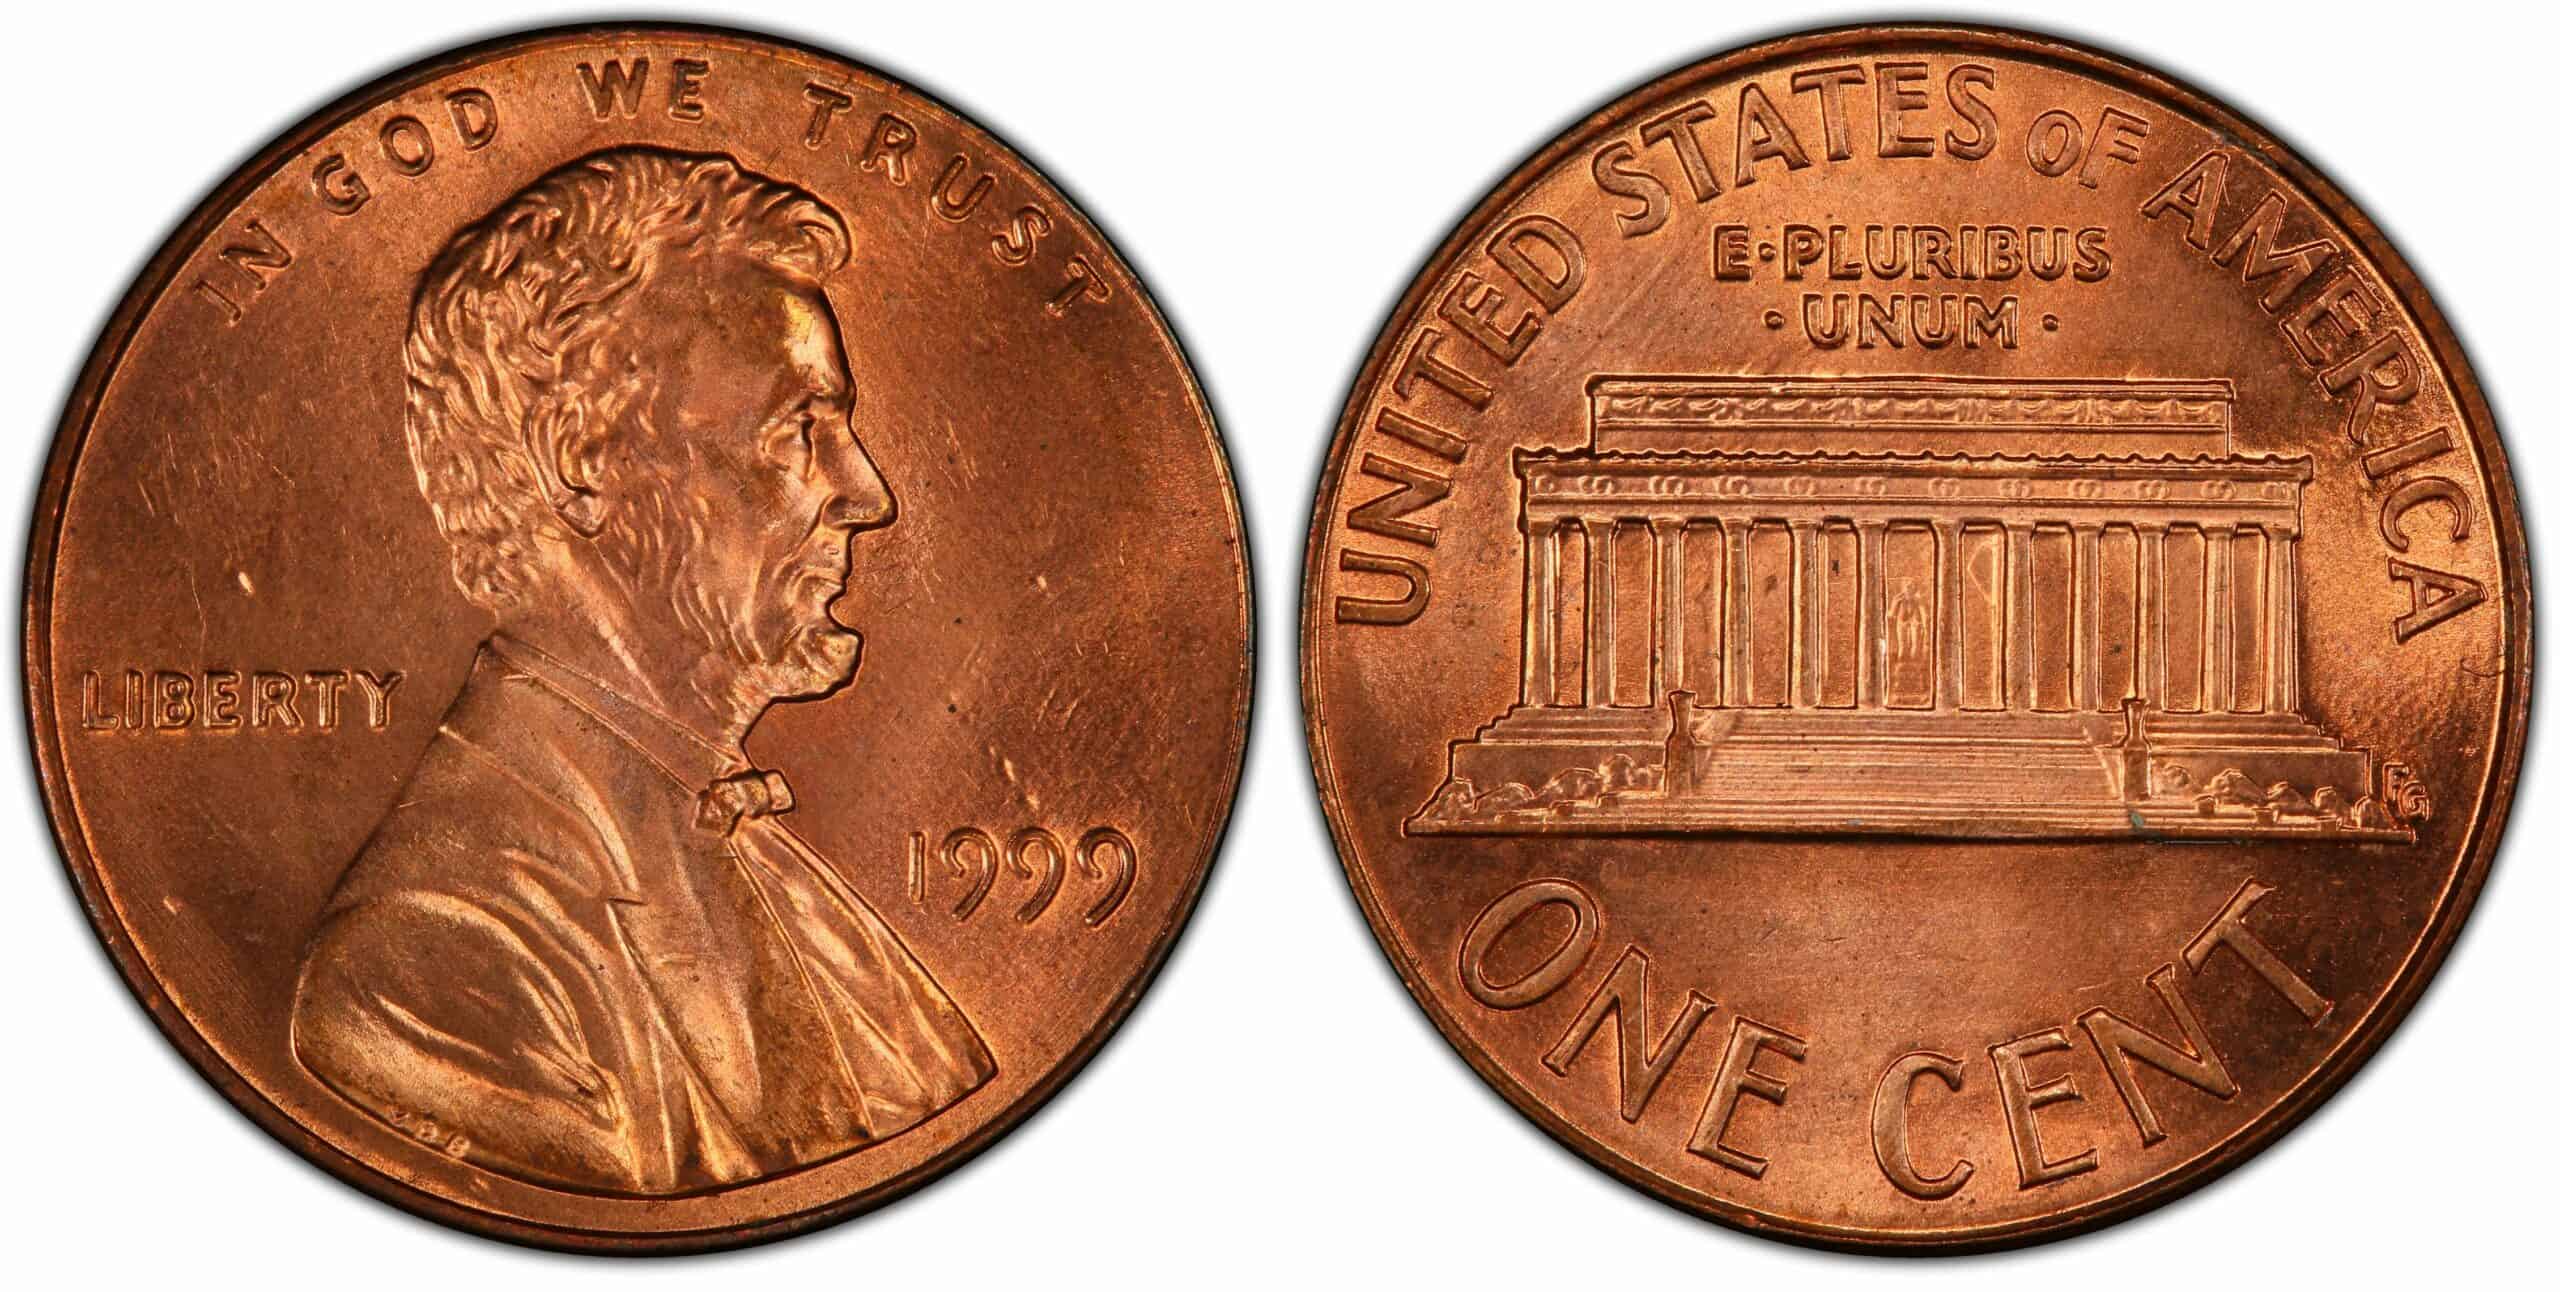 1999 No Mint mark Lincoln Memorial penny